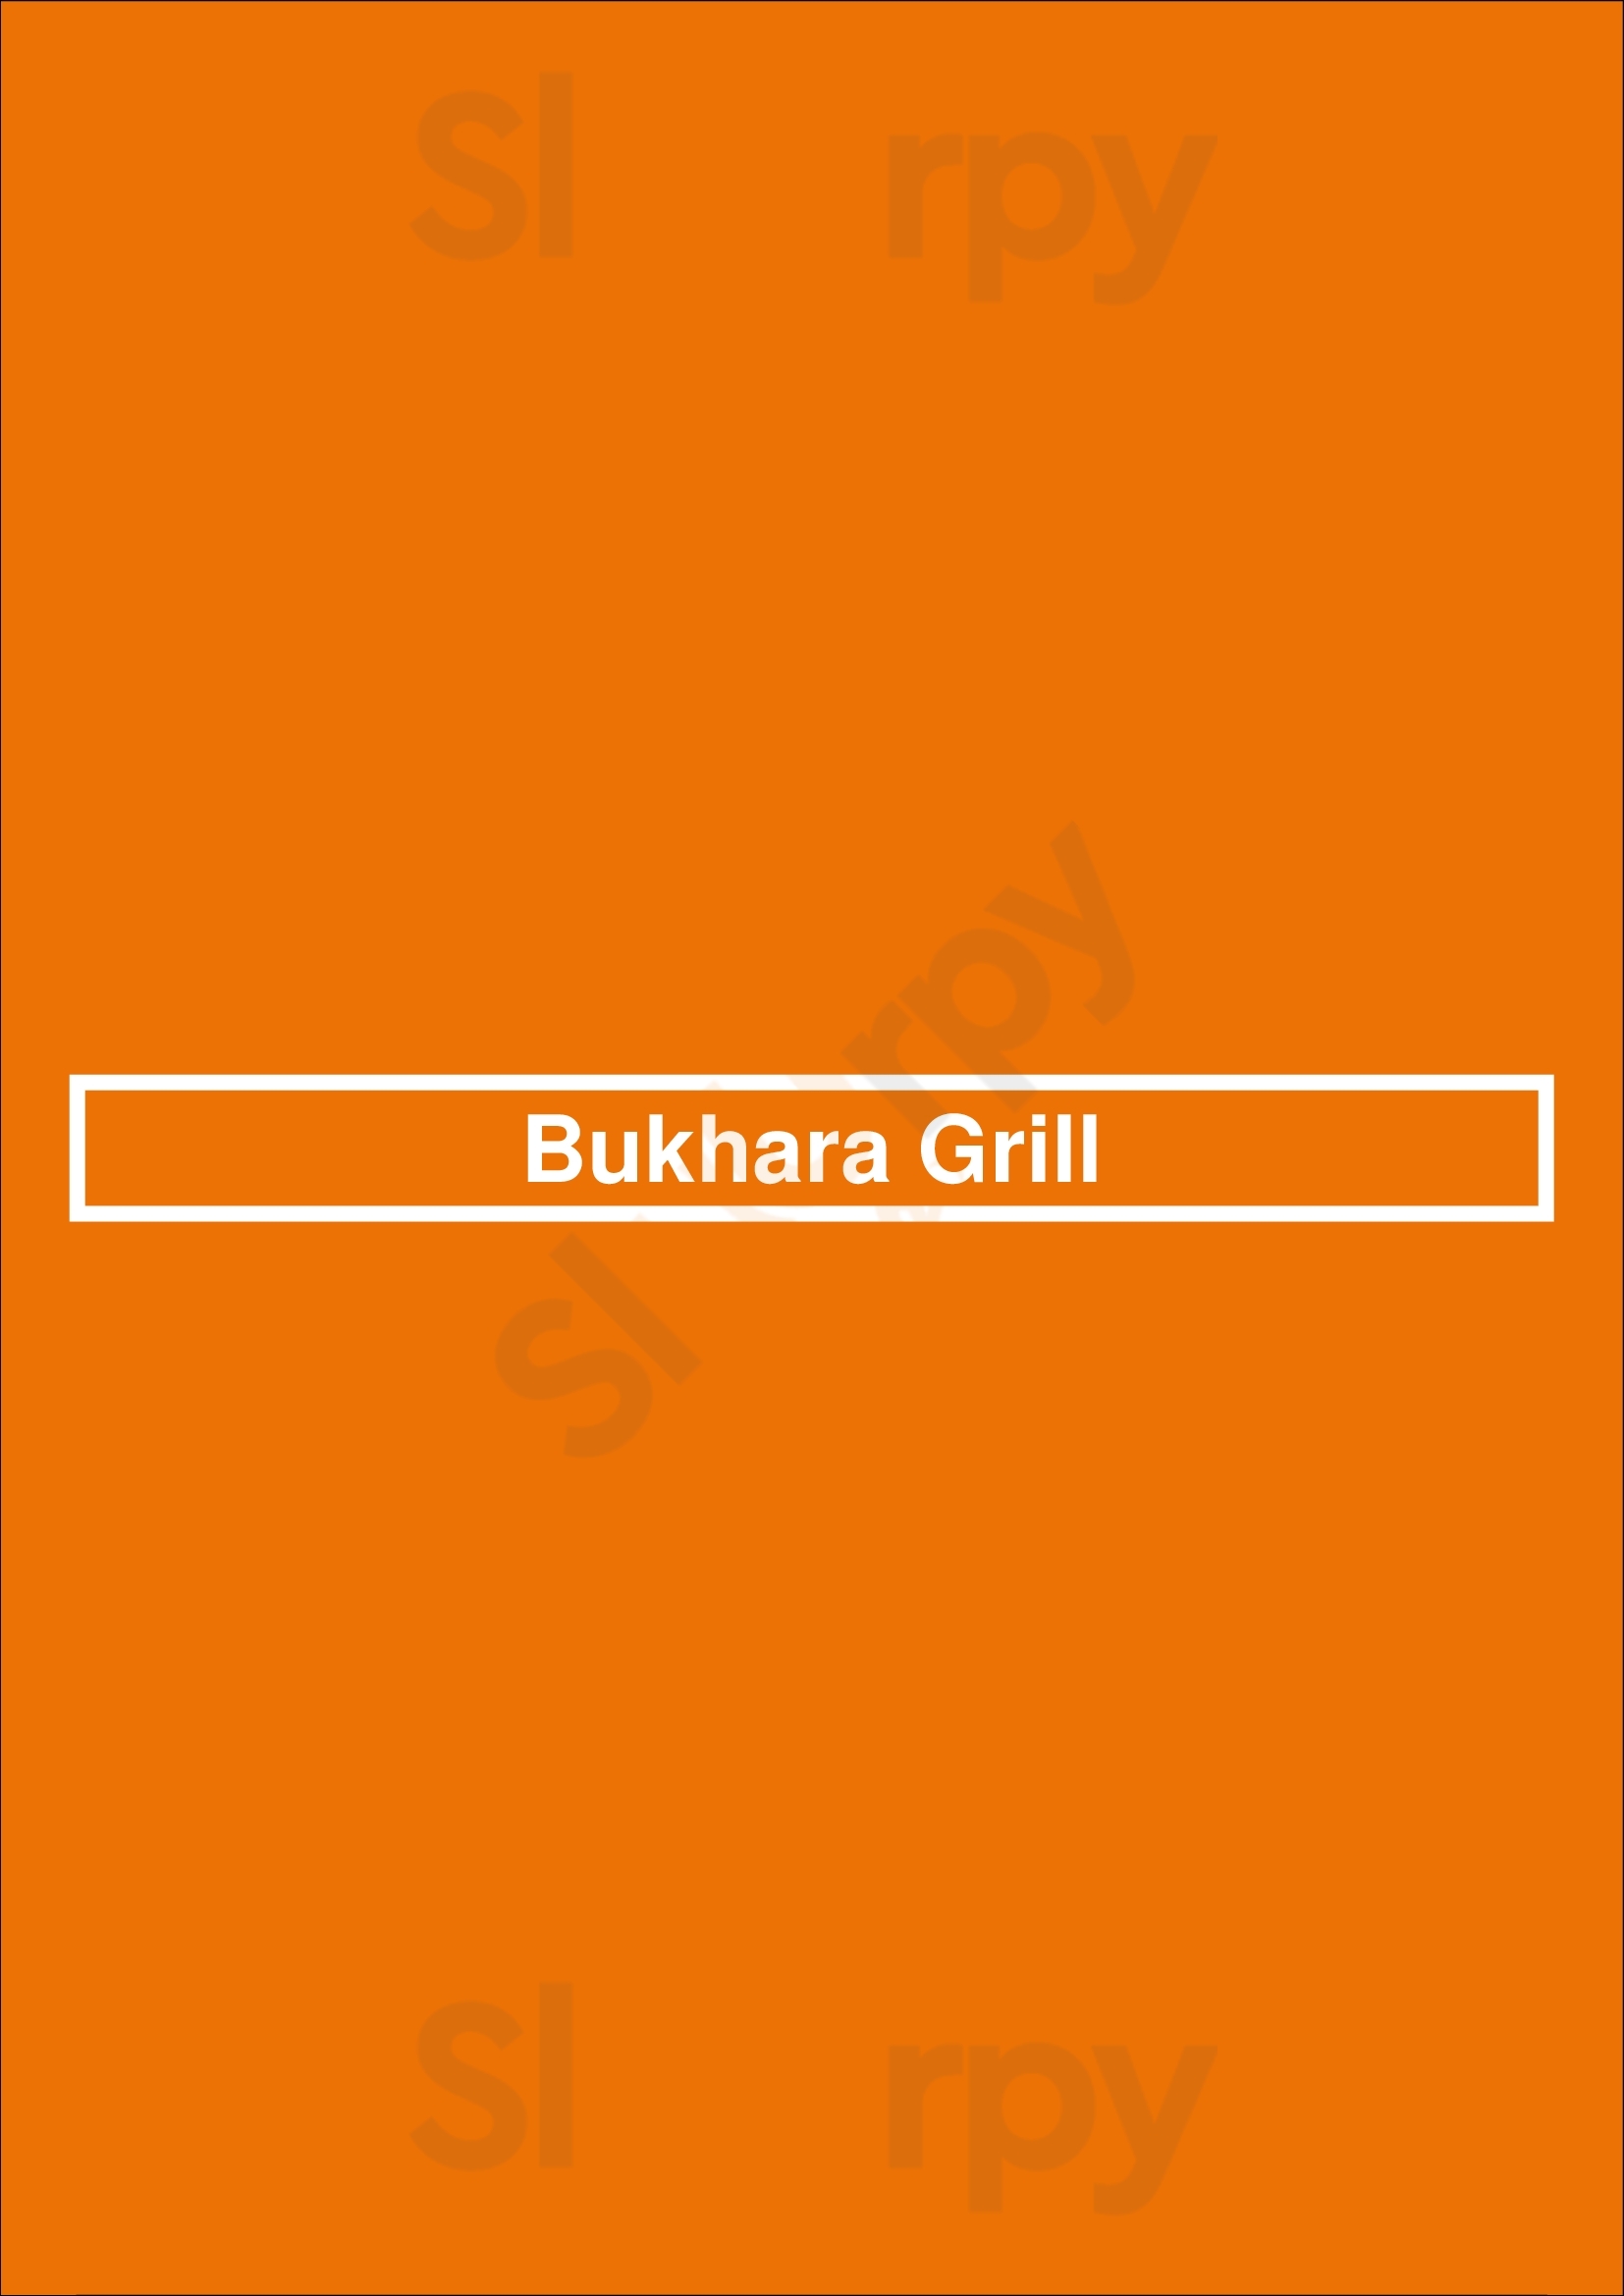 Bukhara Grill Toronto Menu - 1